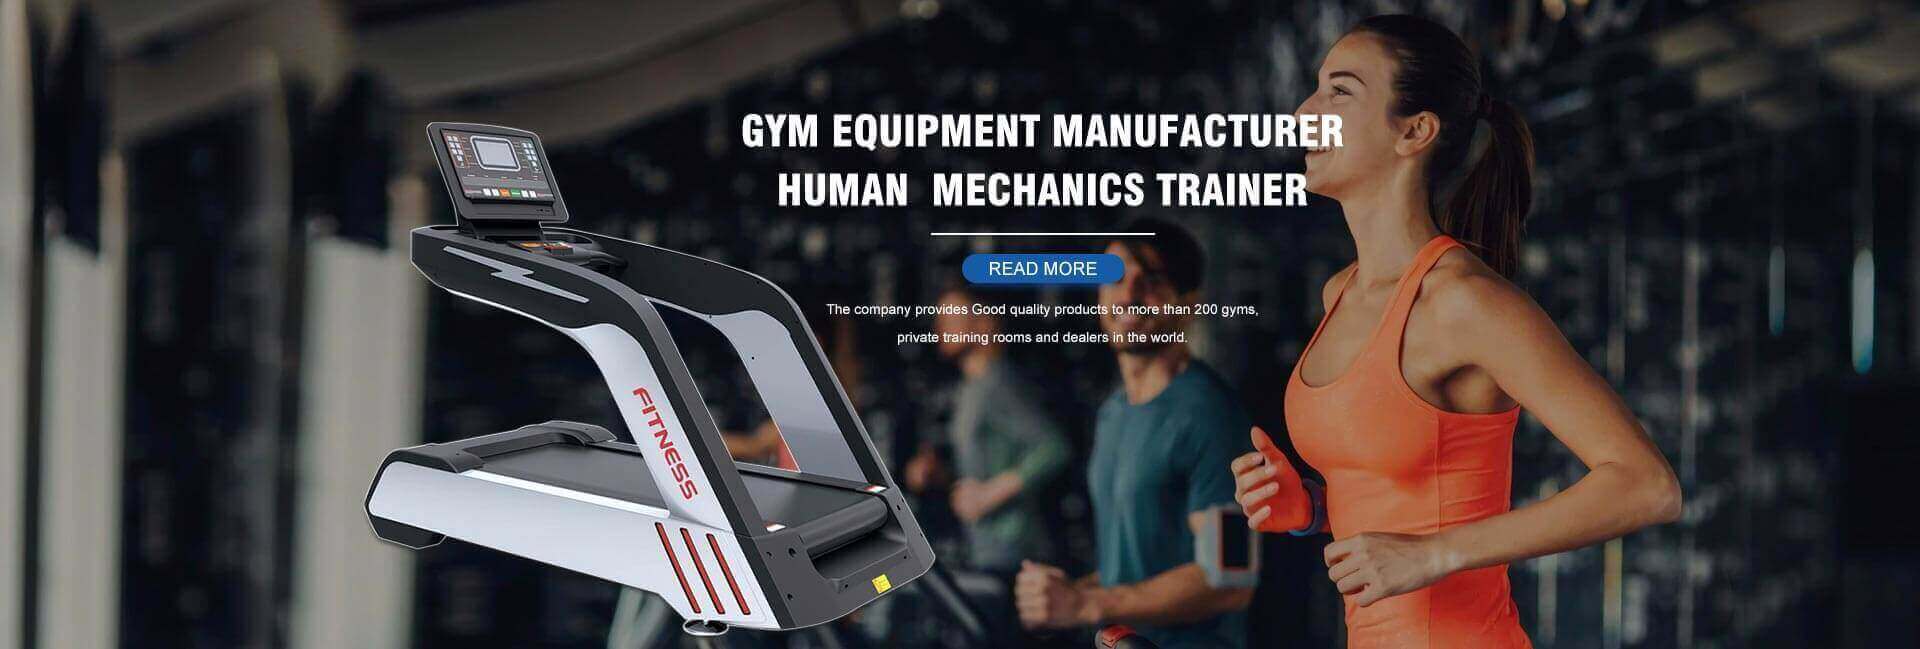 treadmill manufacture